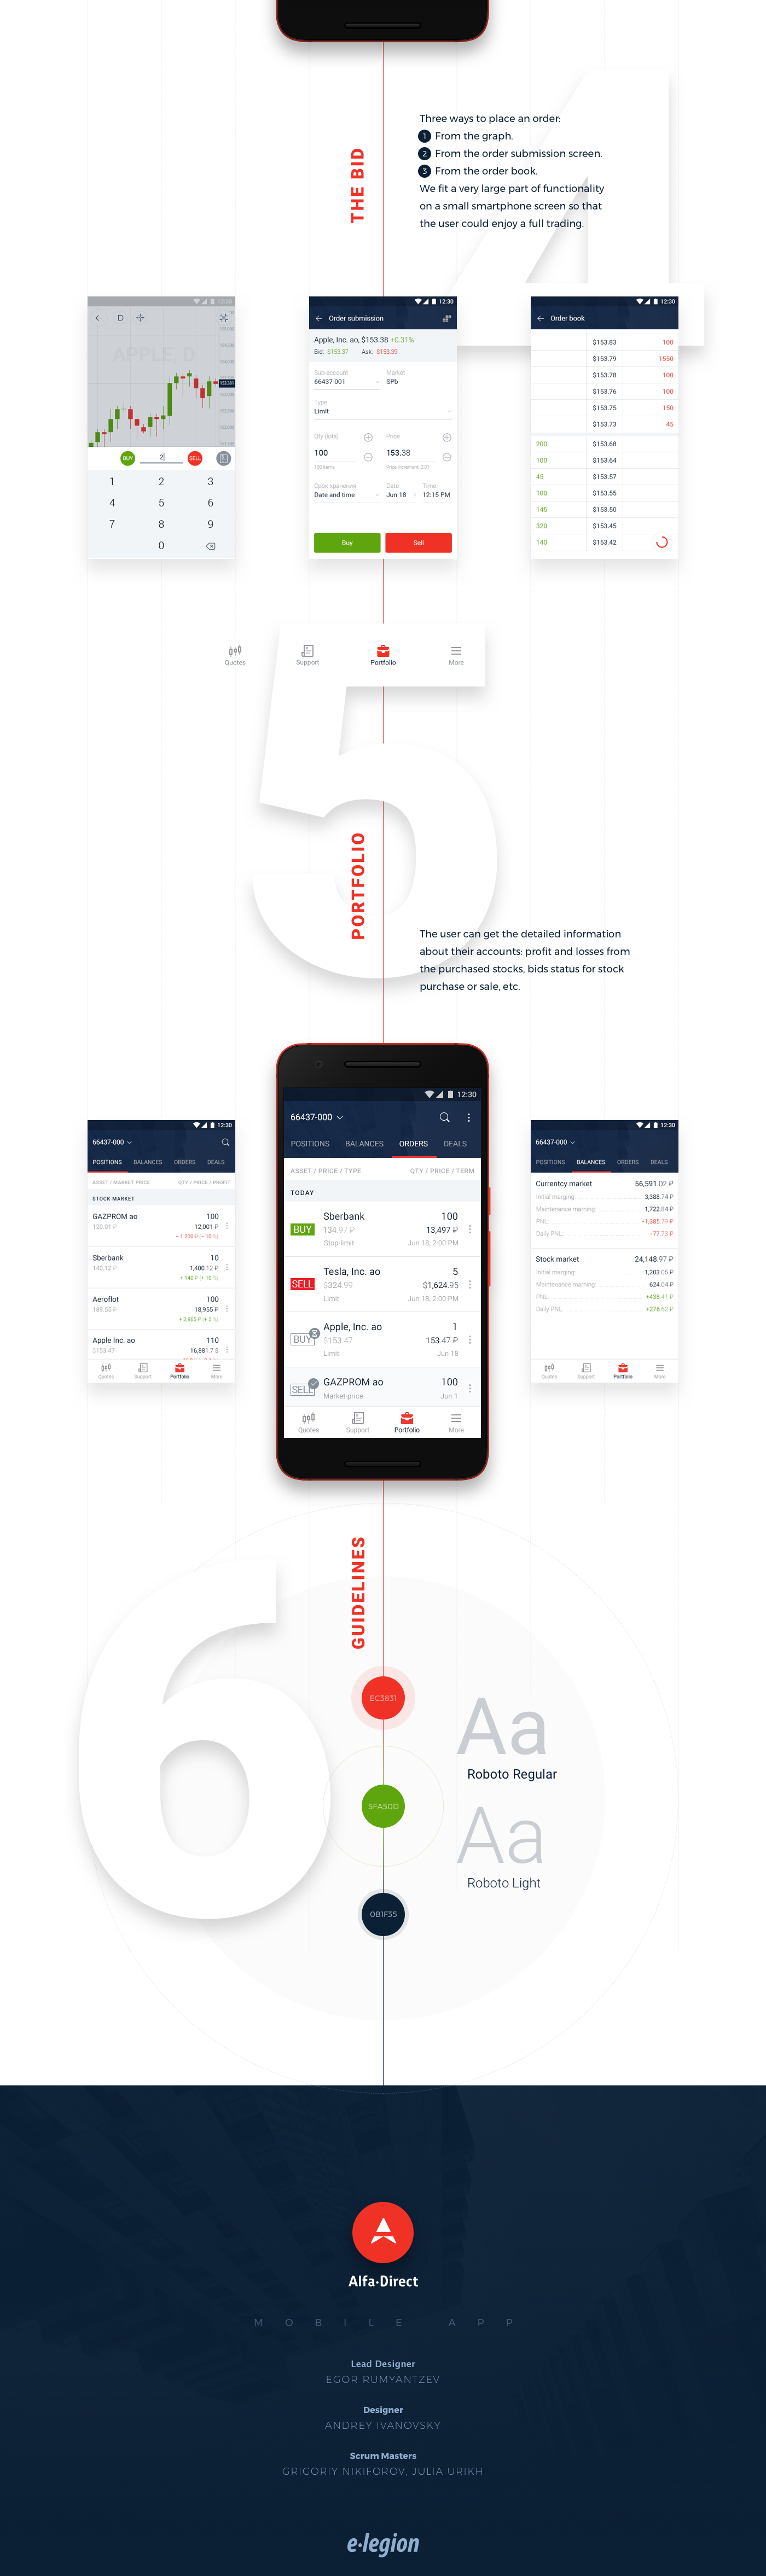 e-legion Mobile app ios Fintech design ux/ui mobile app android alfa-bank